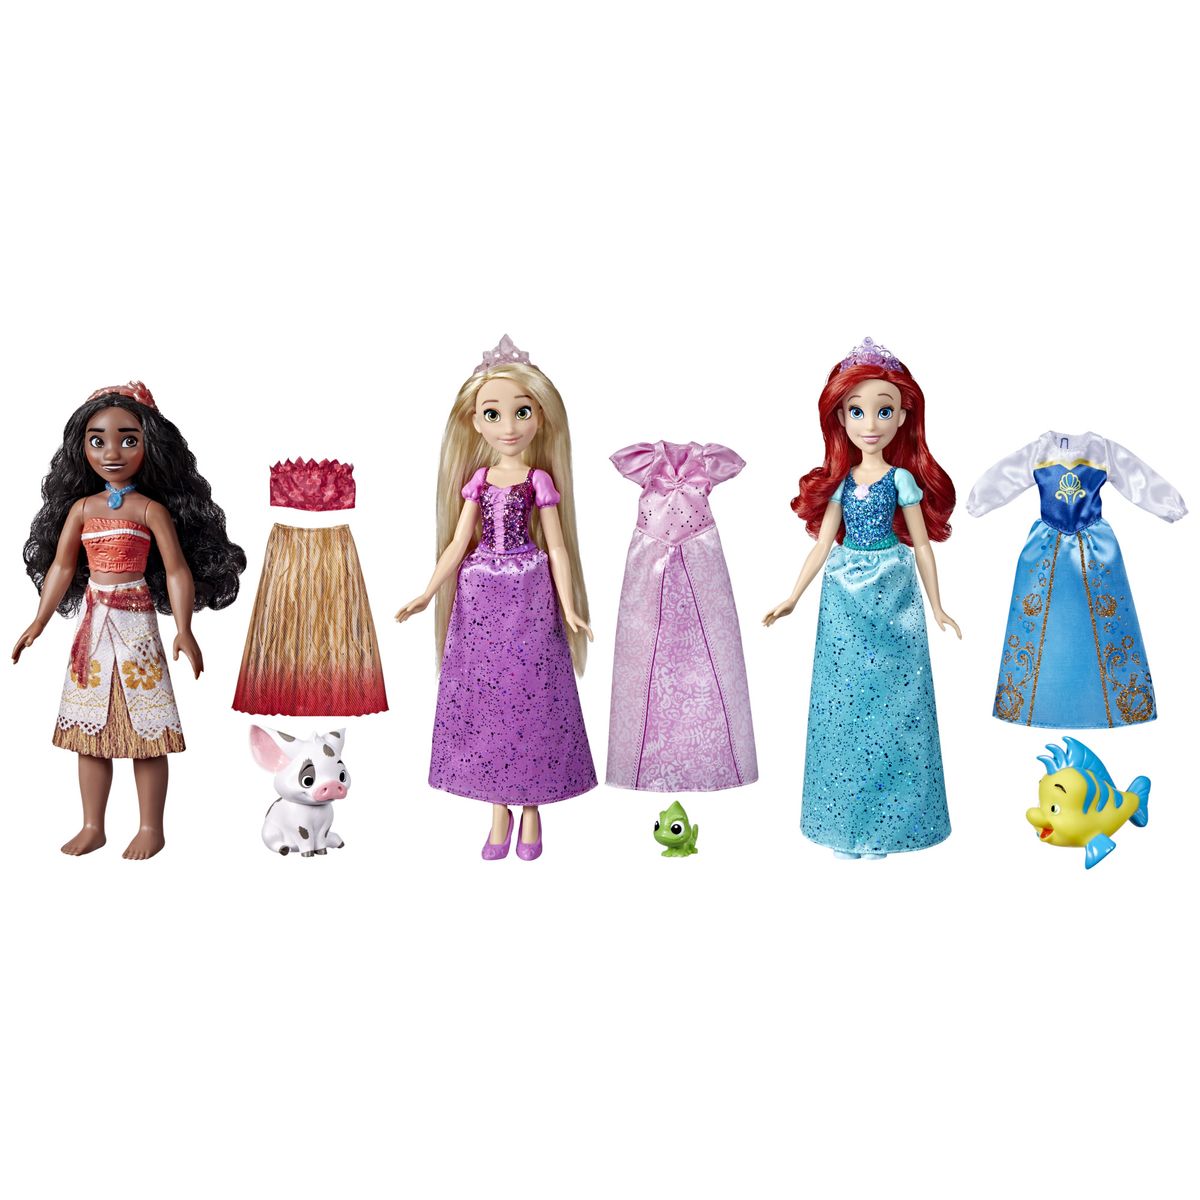 Walmart ウォルマート アメリカ 米国ウォルマート 米国最大規模スーパーマーケットwalmart市場店取扱い希望商品のご意見受付中 送料無料 Disney Princess Royal Fashions And Friends Fashion Doll 3 Pack Ariel Moana And Rapunzel Toy For Girls 3 Up ロイヤル